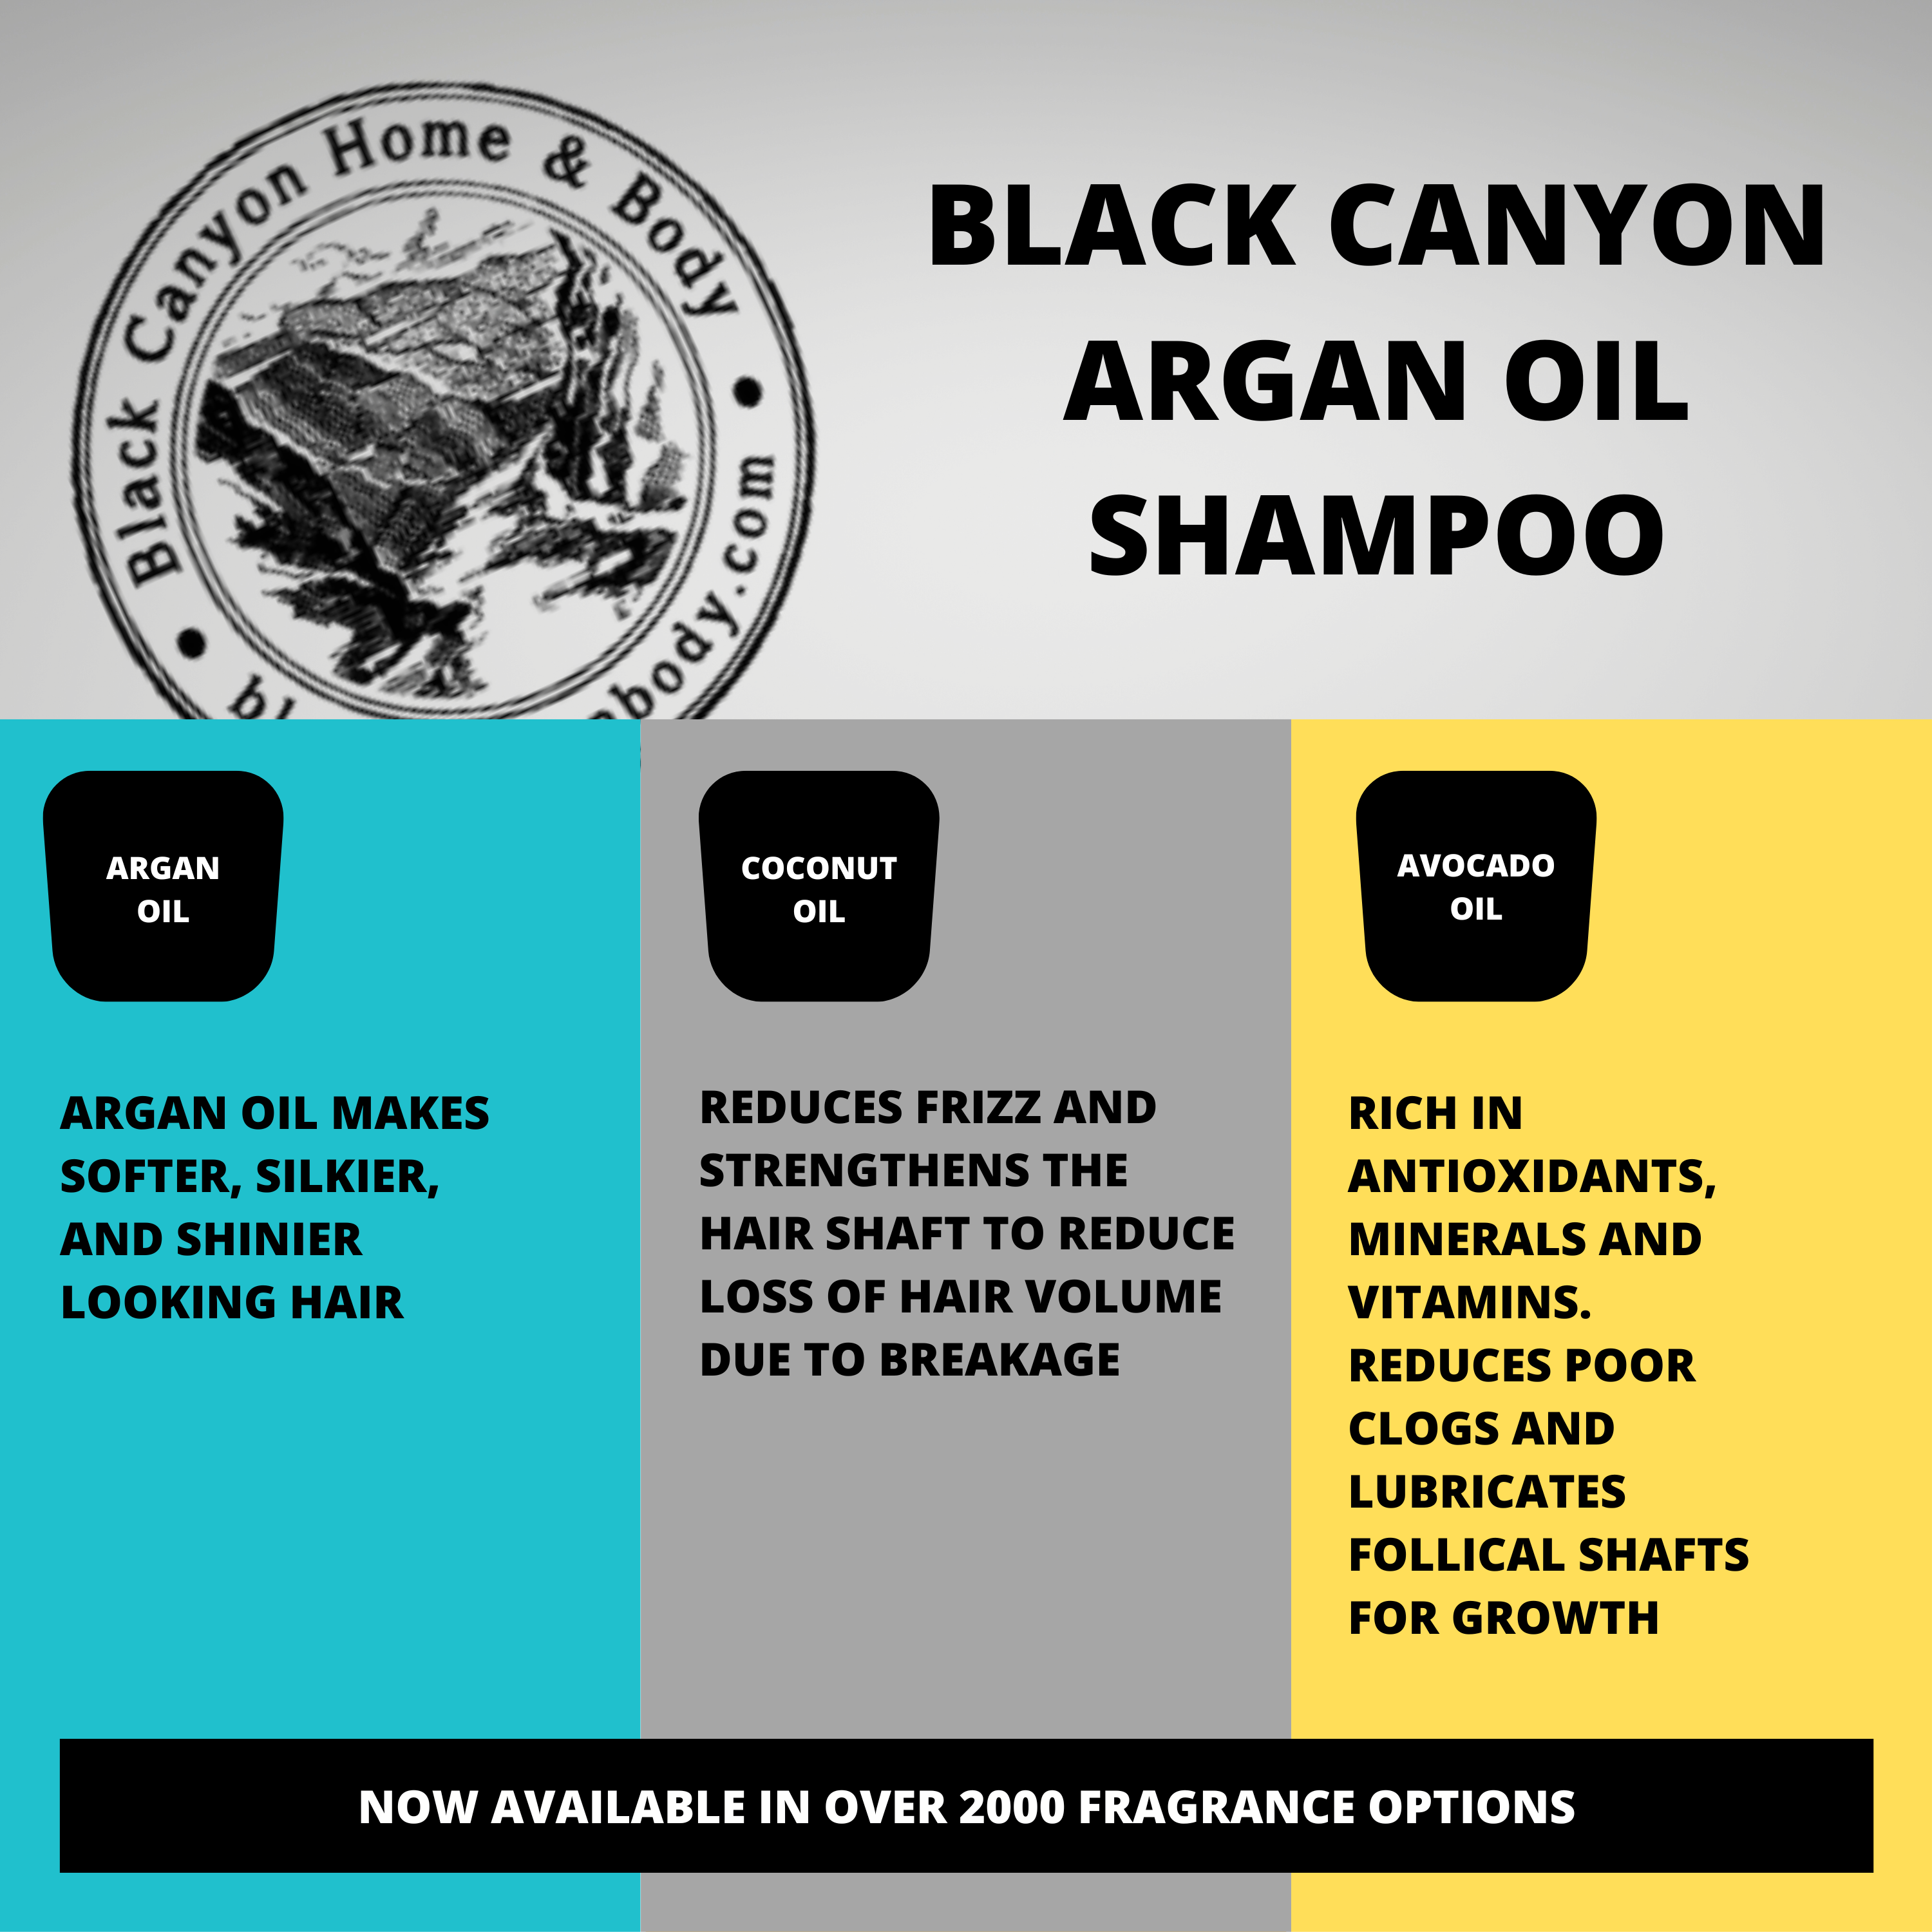 Black Canyon Wild Cherry Vanilla Scented Shampoo with Argan Oil